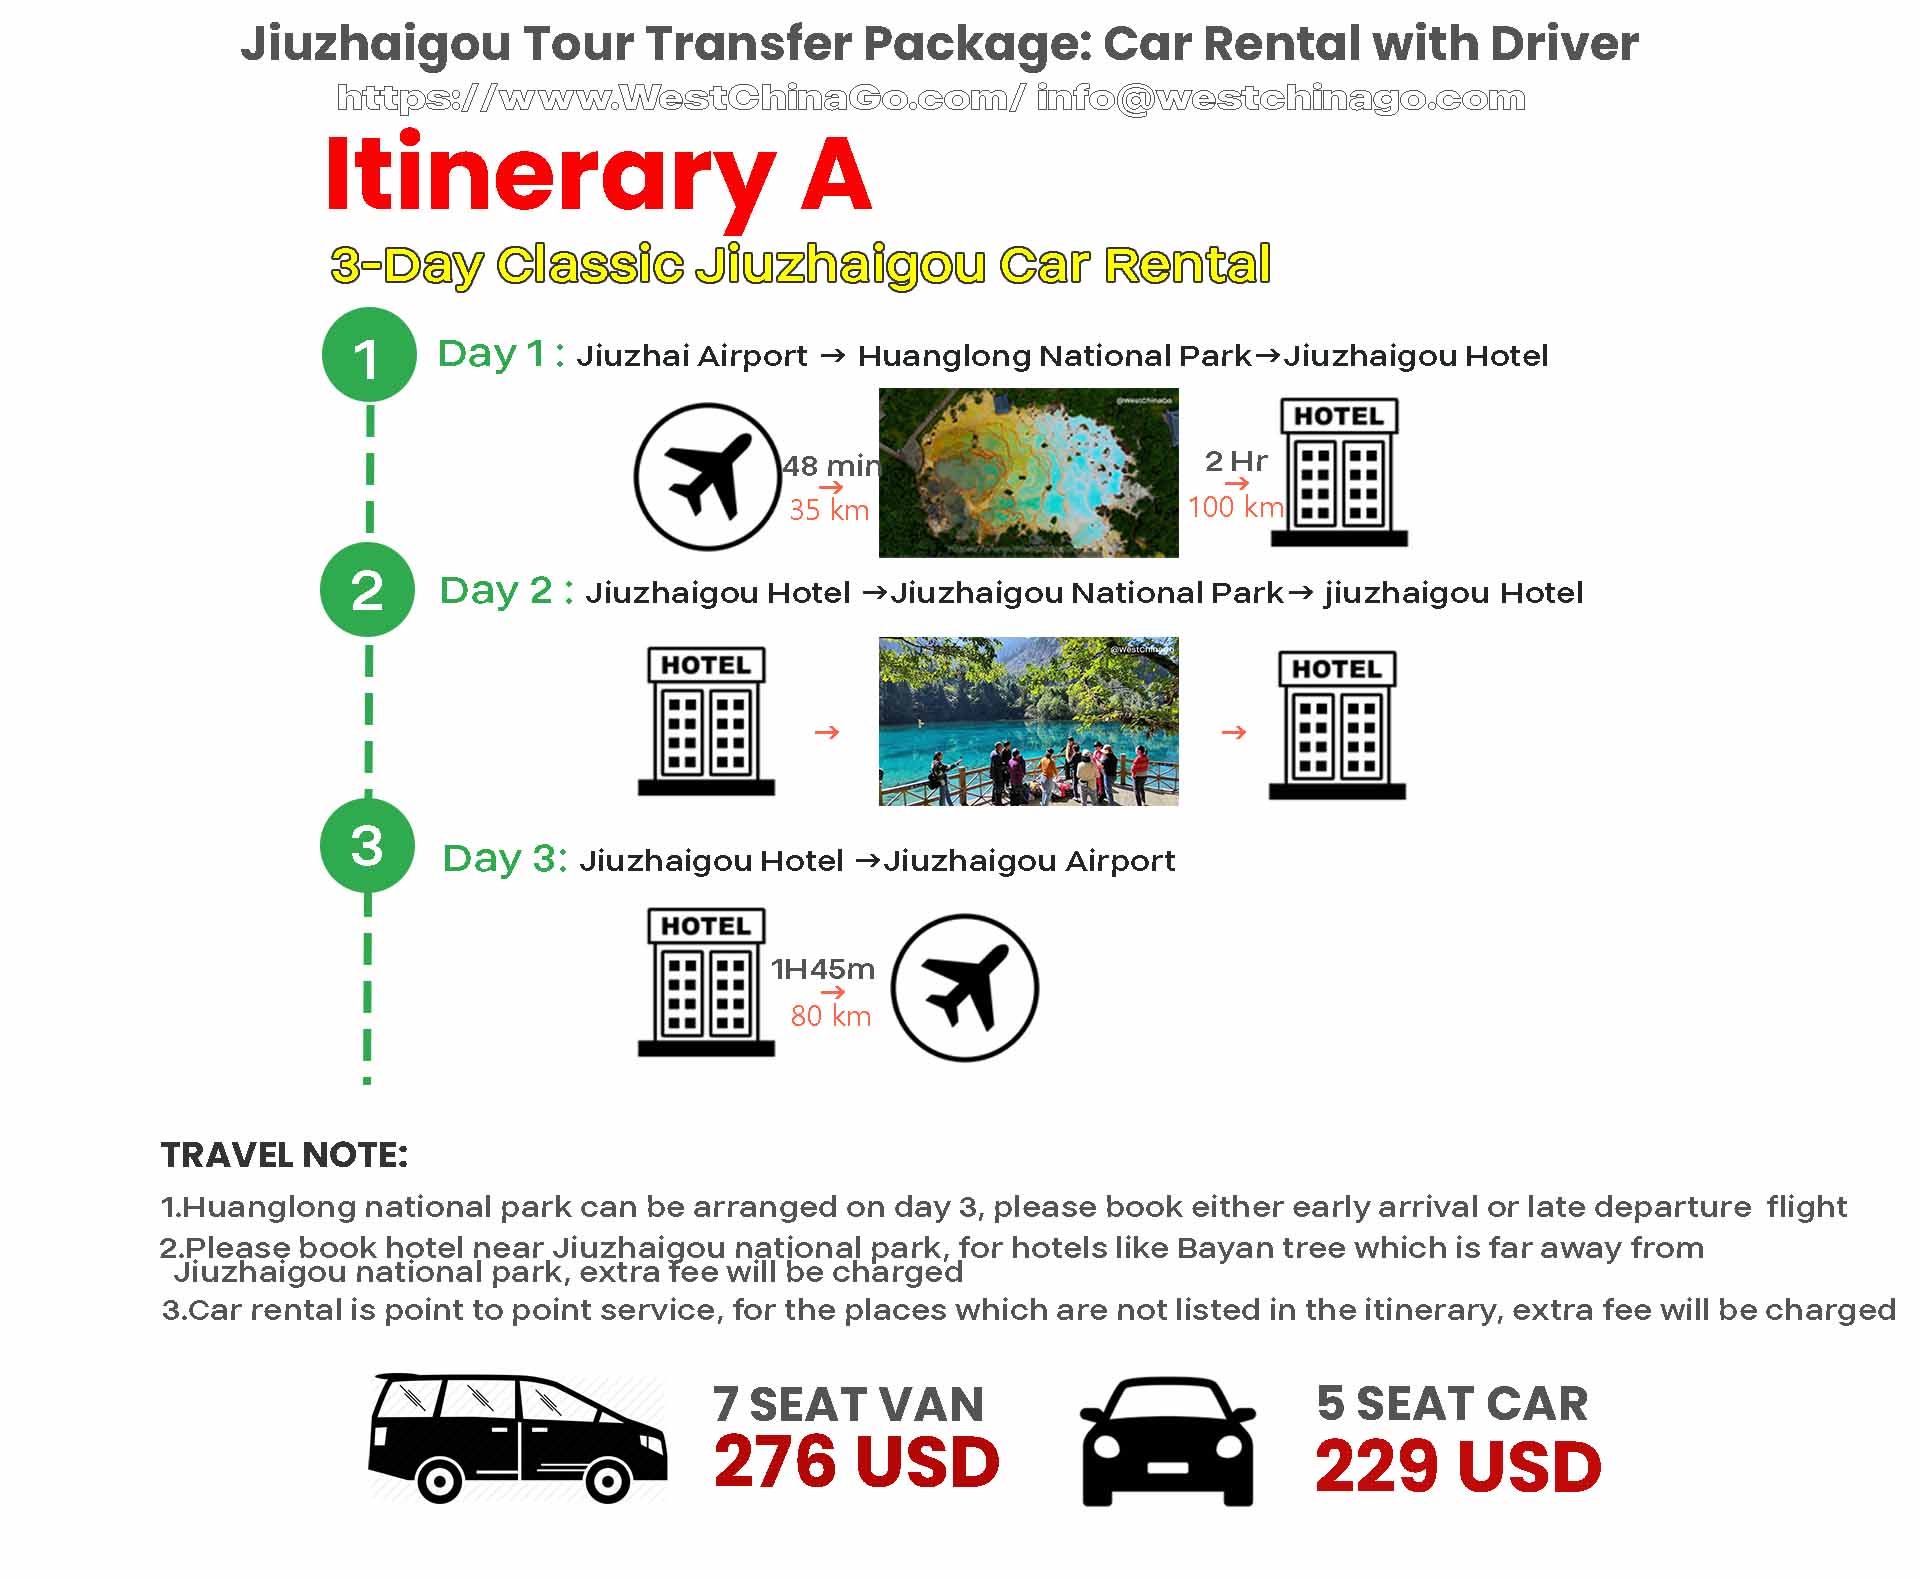 Jiuzhaigou Tour Transfer: Car Rental with Driver